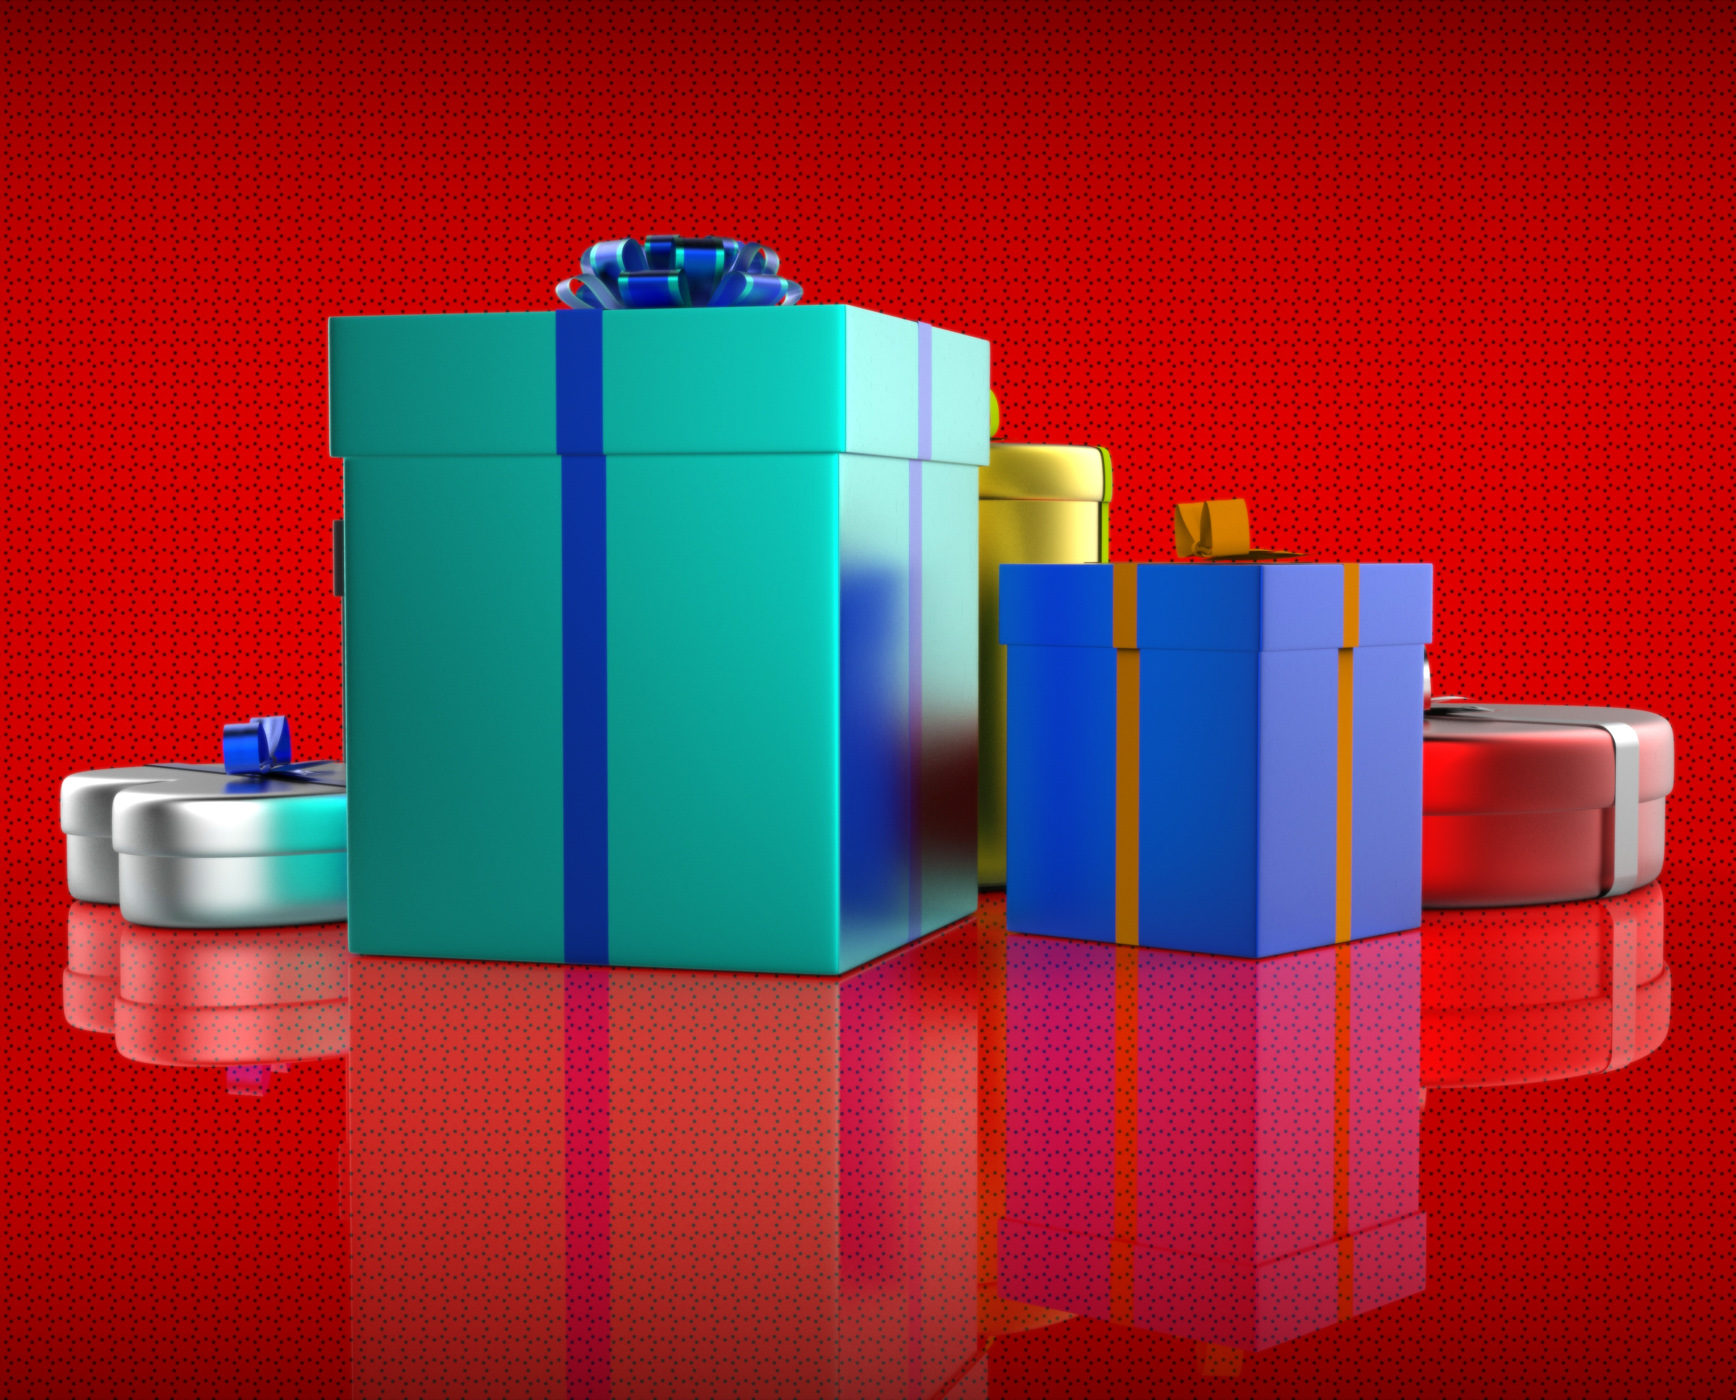 Celebration giftbox indicates joy giftboxes and occasion photo